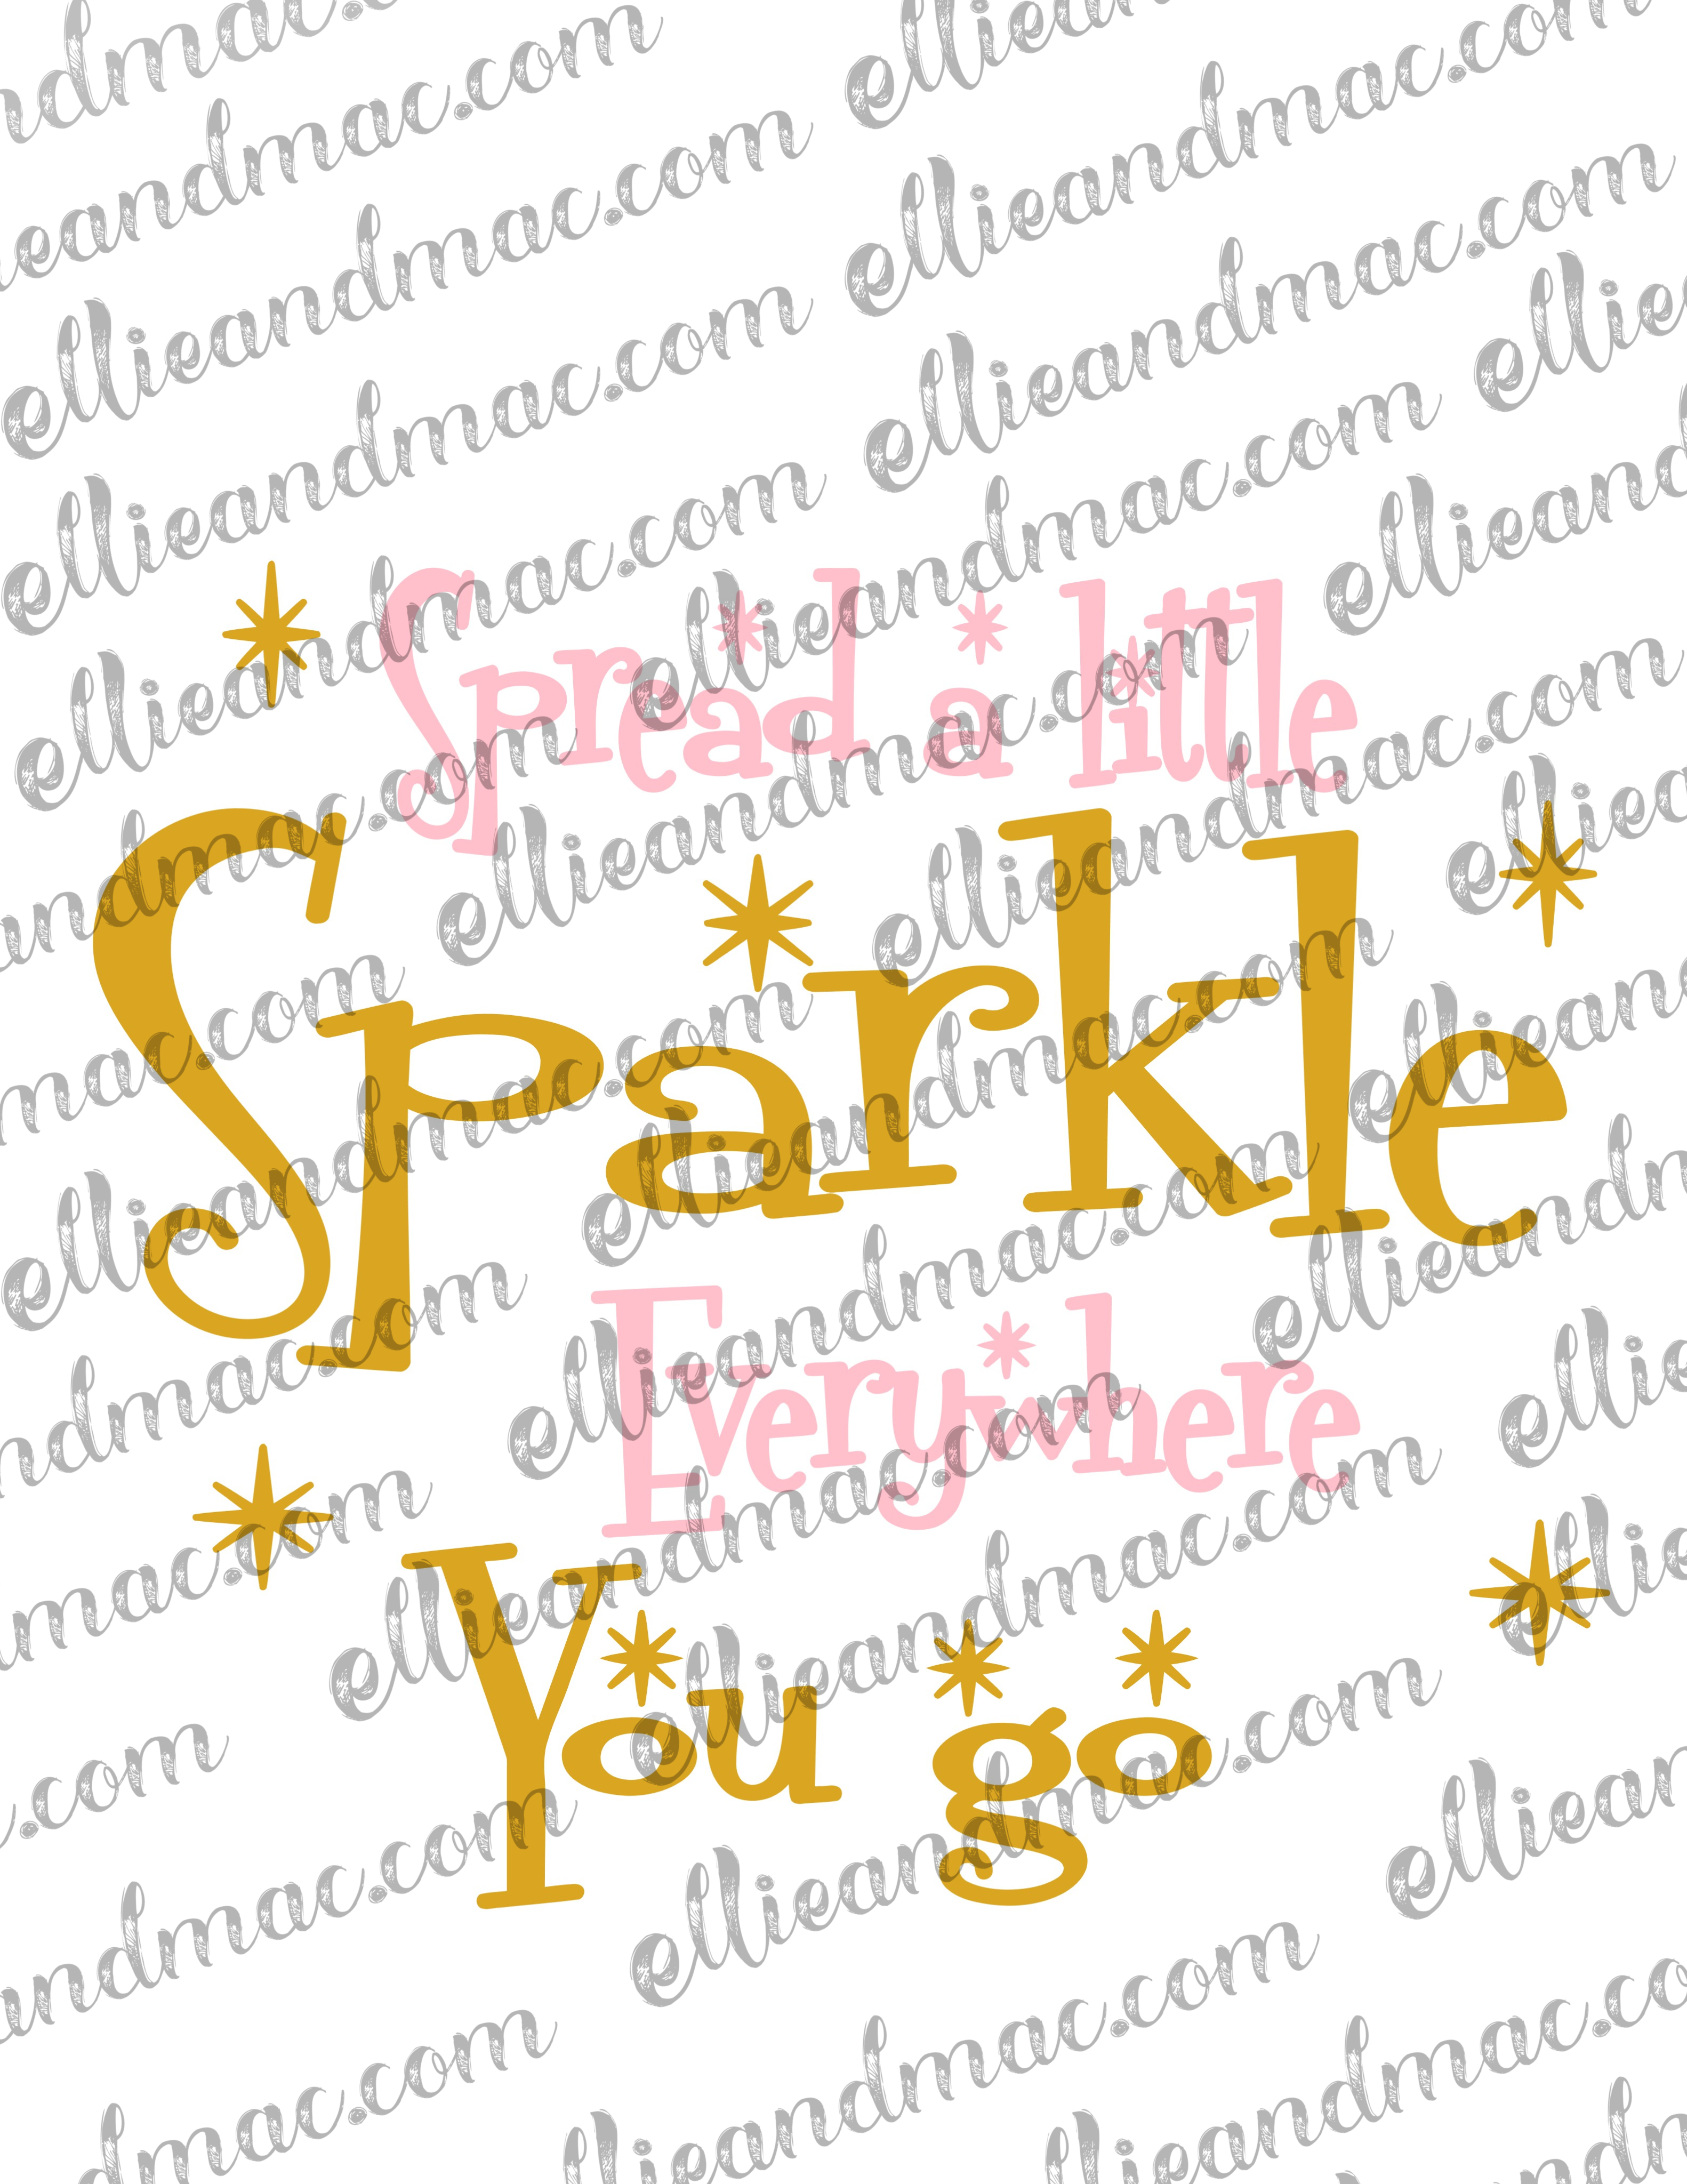 Leave A Little Sparkle Wherever You Go svg, Brand Sparkling new svg,  Sparkle svg, dxf and png instant download, Quotes SVG, Girls svg